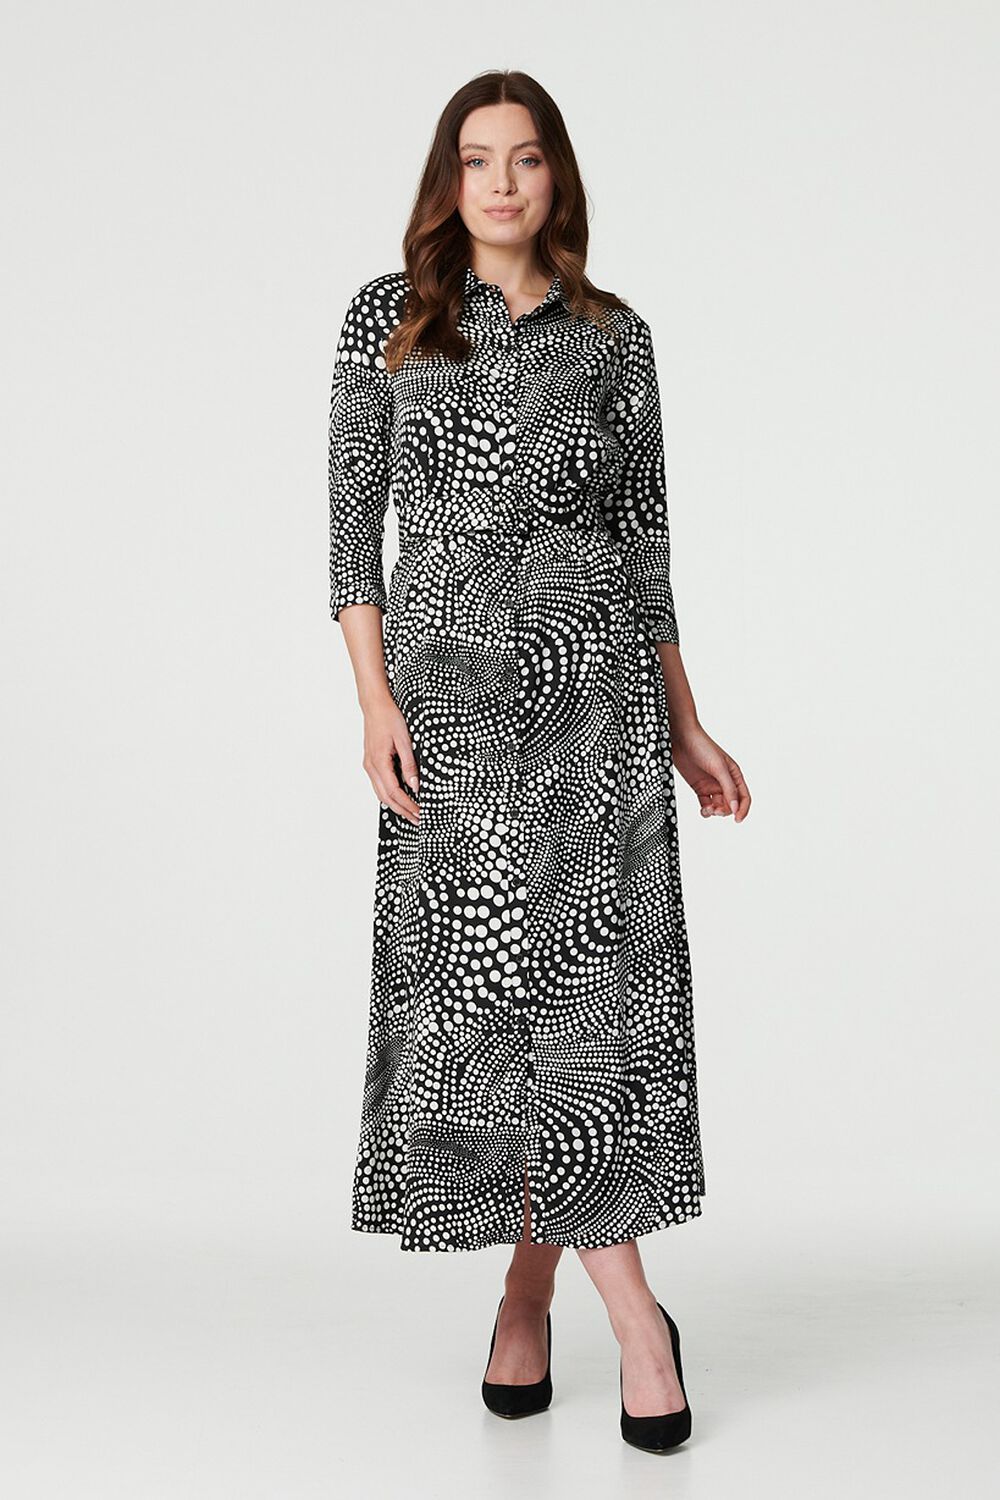 Izabel London Black - Dotty Print 3/4 Sleeve Shirt Dress, Size: 16